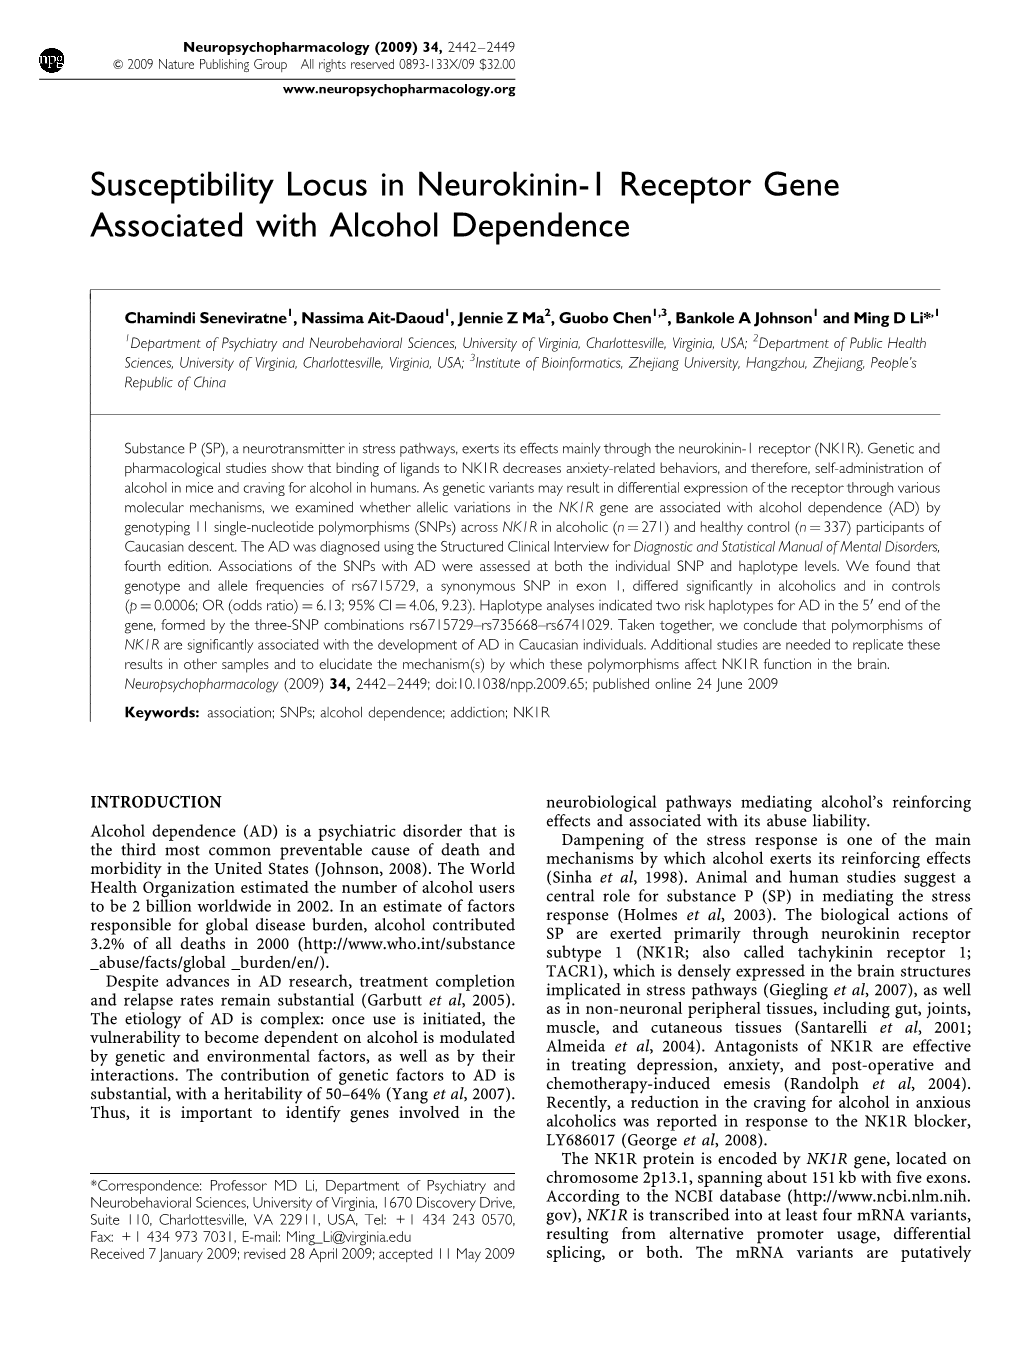 Susceptibility Locus in Neurokinin-1 Receptor Gene Associated with Alcohol Dependence